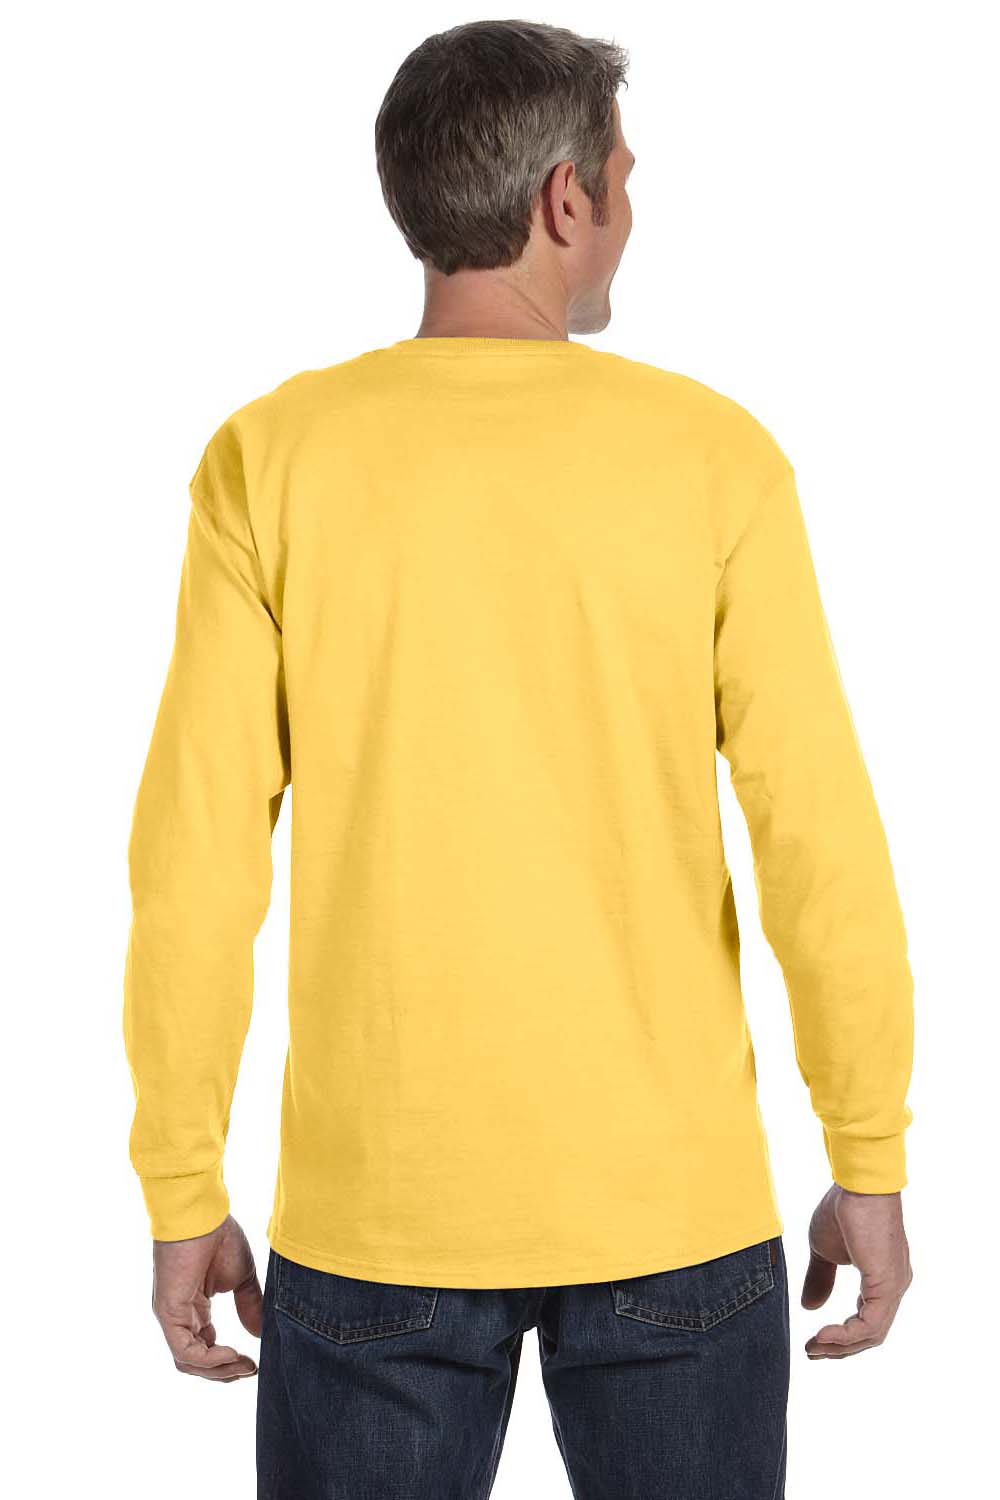 Jerzees 29L Mens Dri-Power Moisture Wicking Long Sleeve Crewneck T-Shirt Island Yellow Back